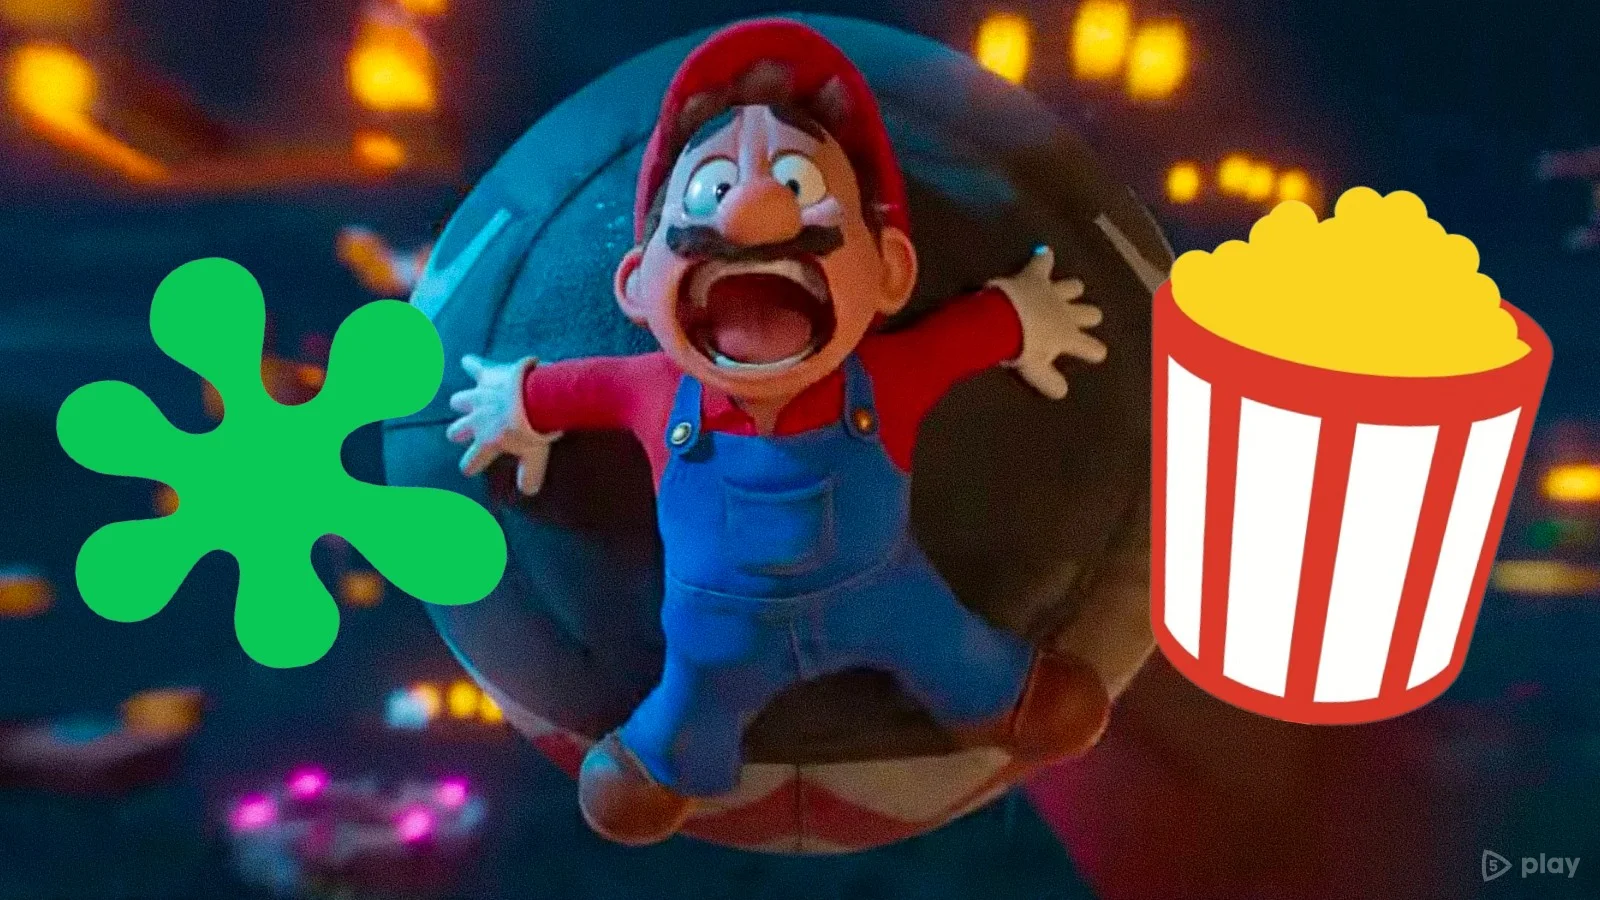 Мультфильм по мотивам видеоигры про Супер Марио не понравился критикам